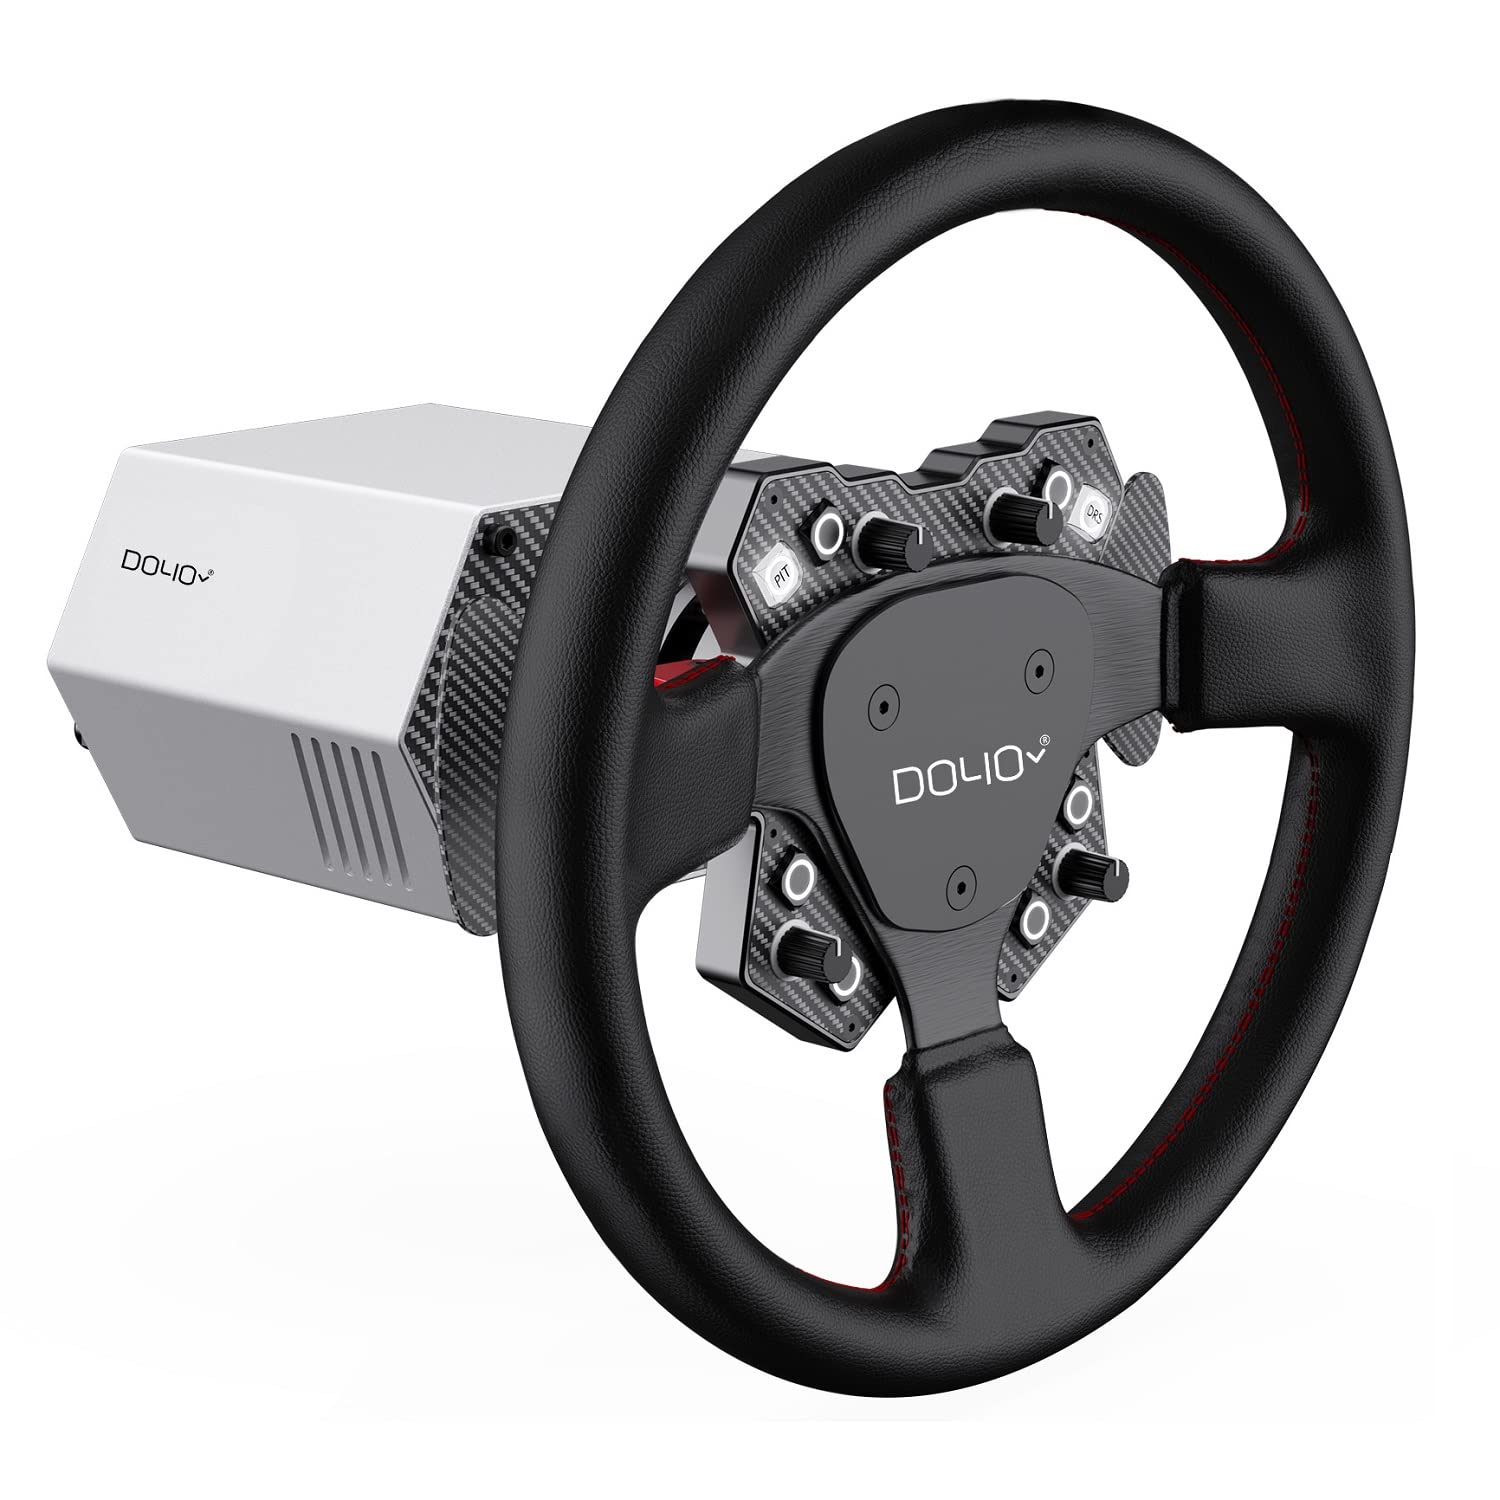 DOYO PC Direct Drive Wheel, Gaming Racing Driving Force Feedback Wheel ...